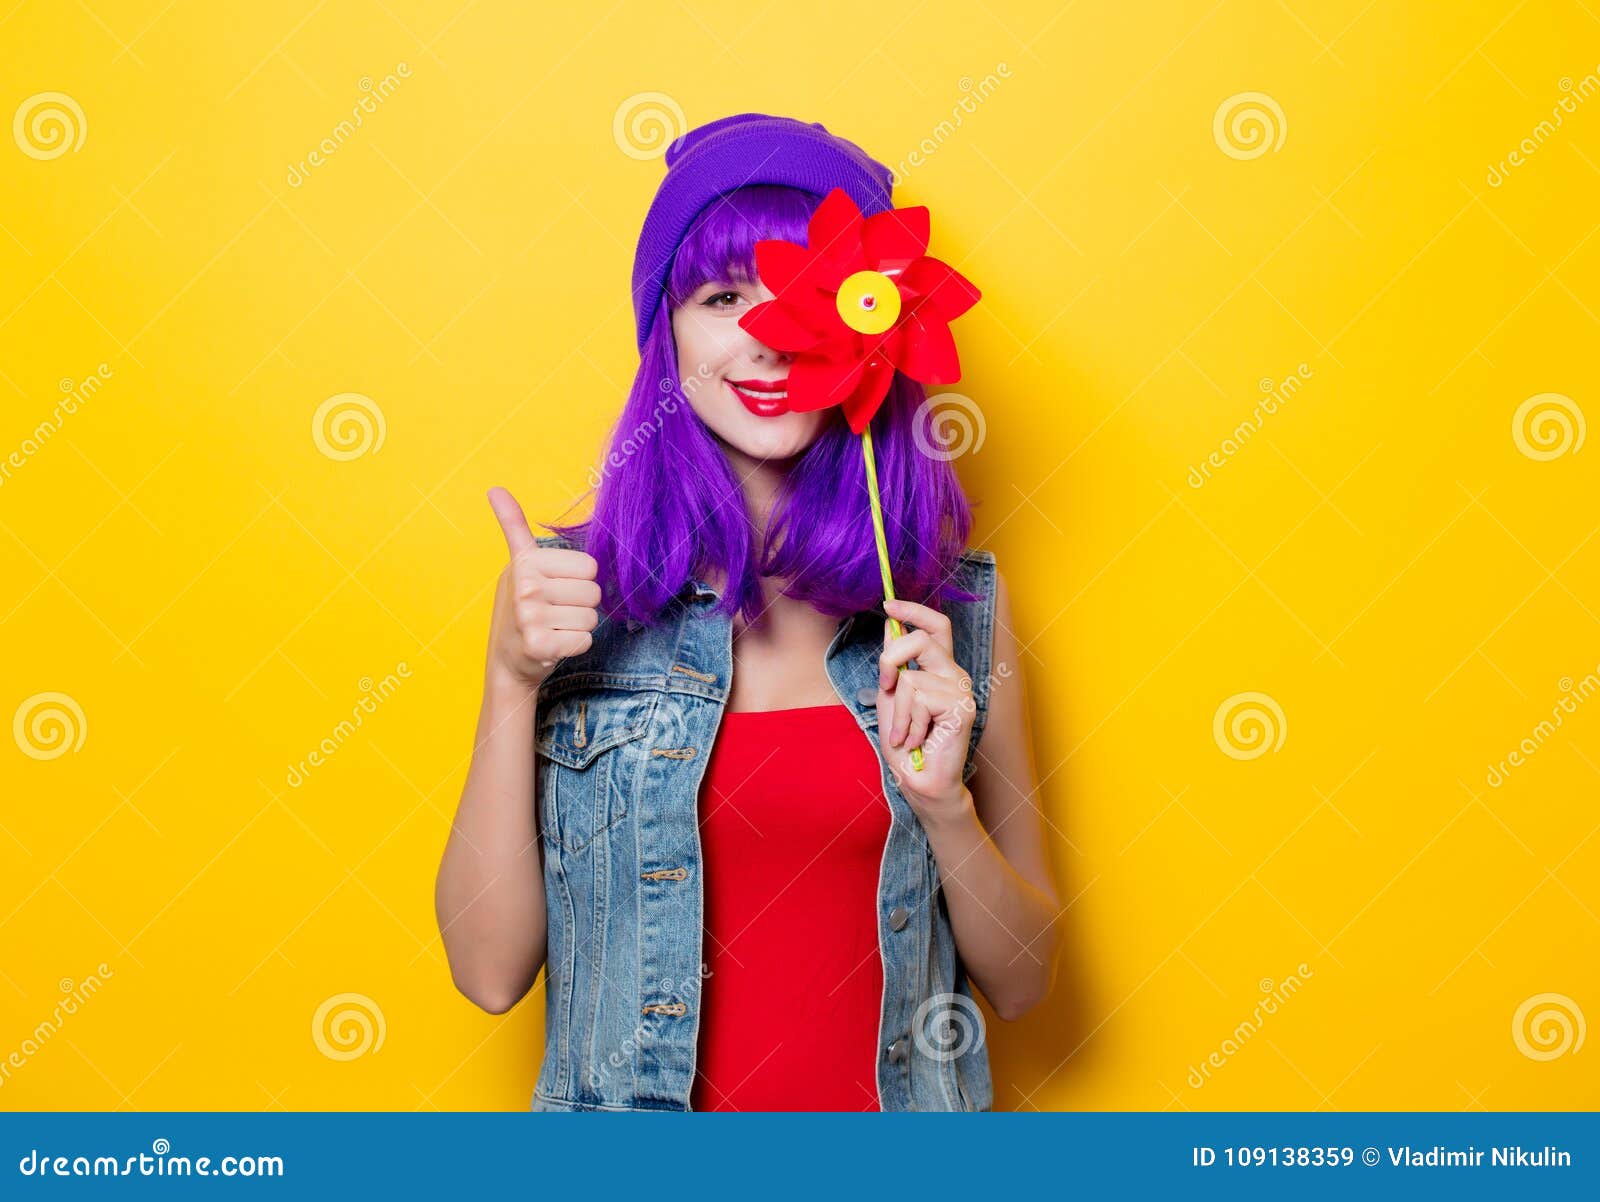 blue and purple pinwheel hair